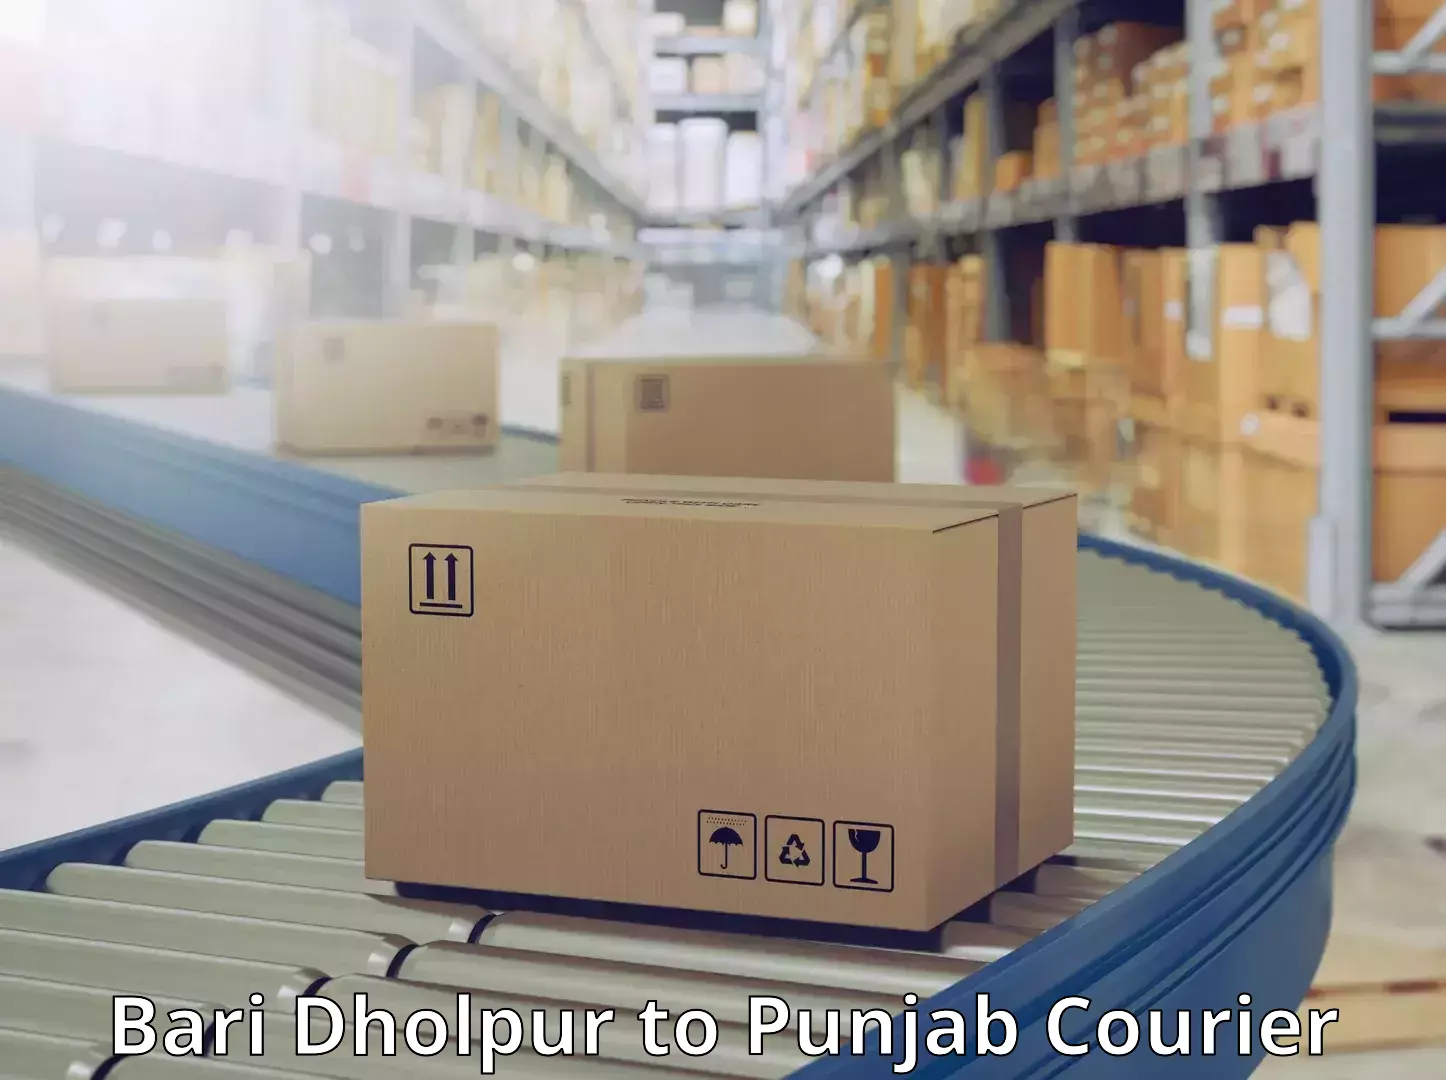 Modern courier technology Bari Dholpur to Rupnagar